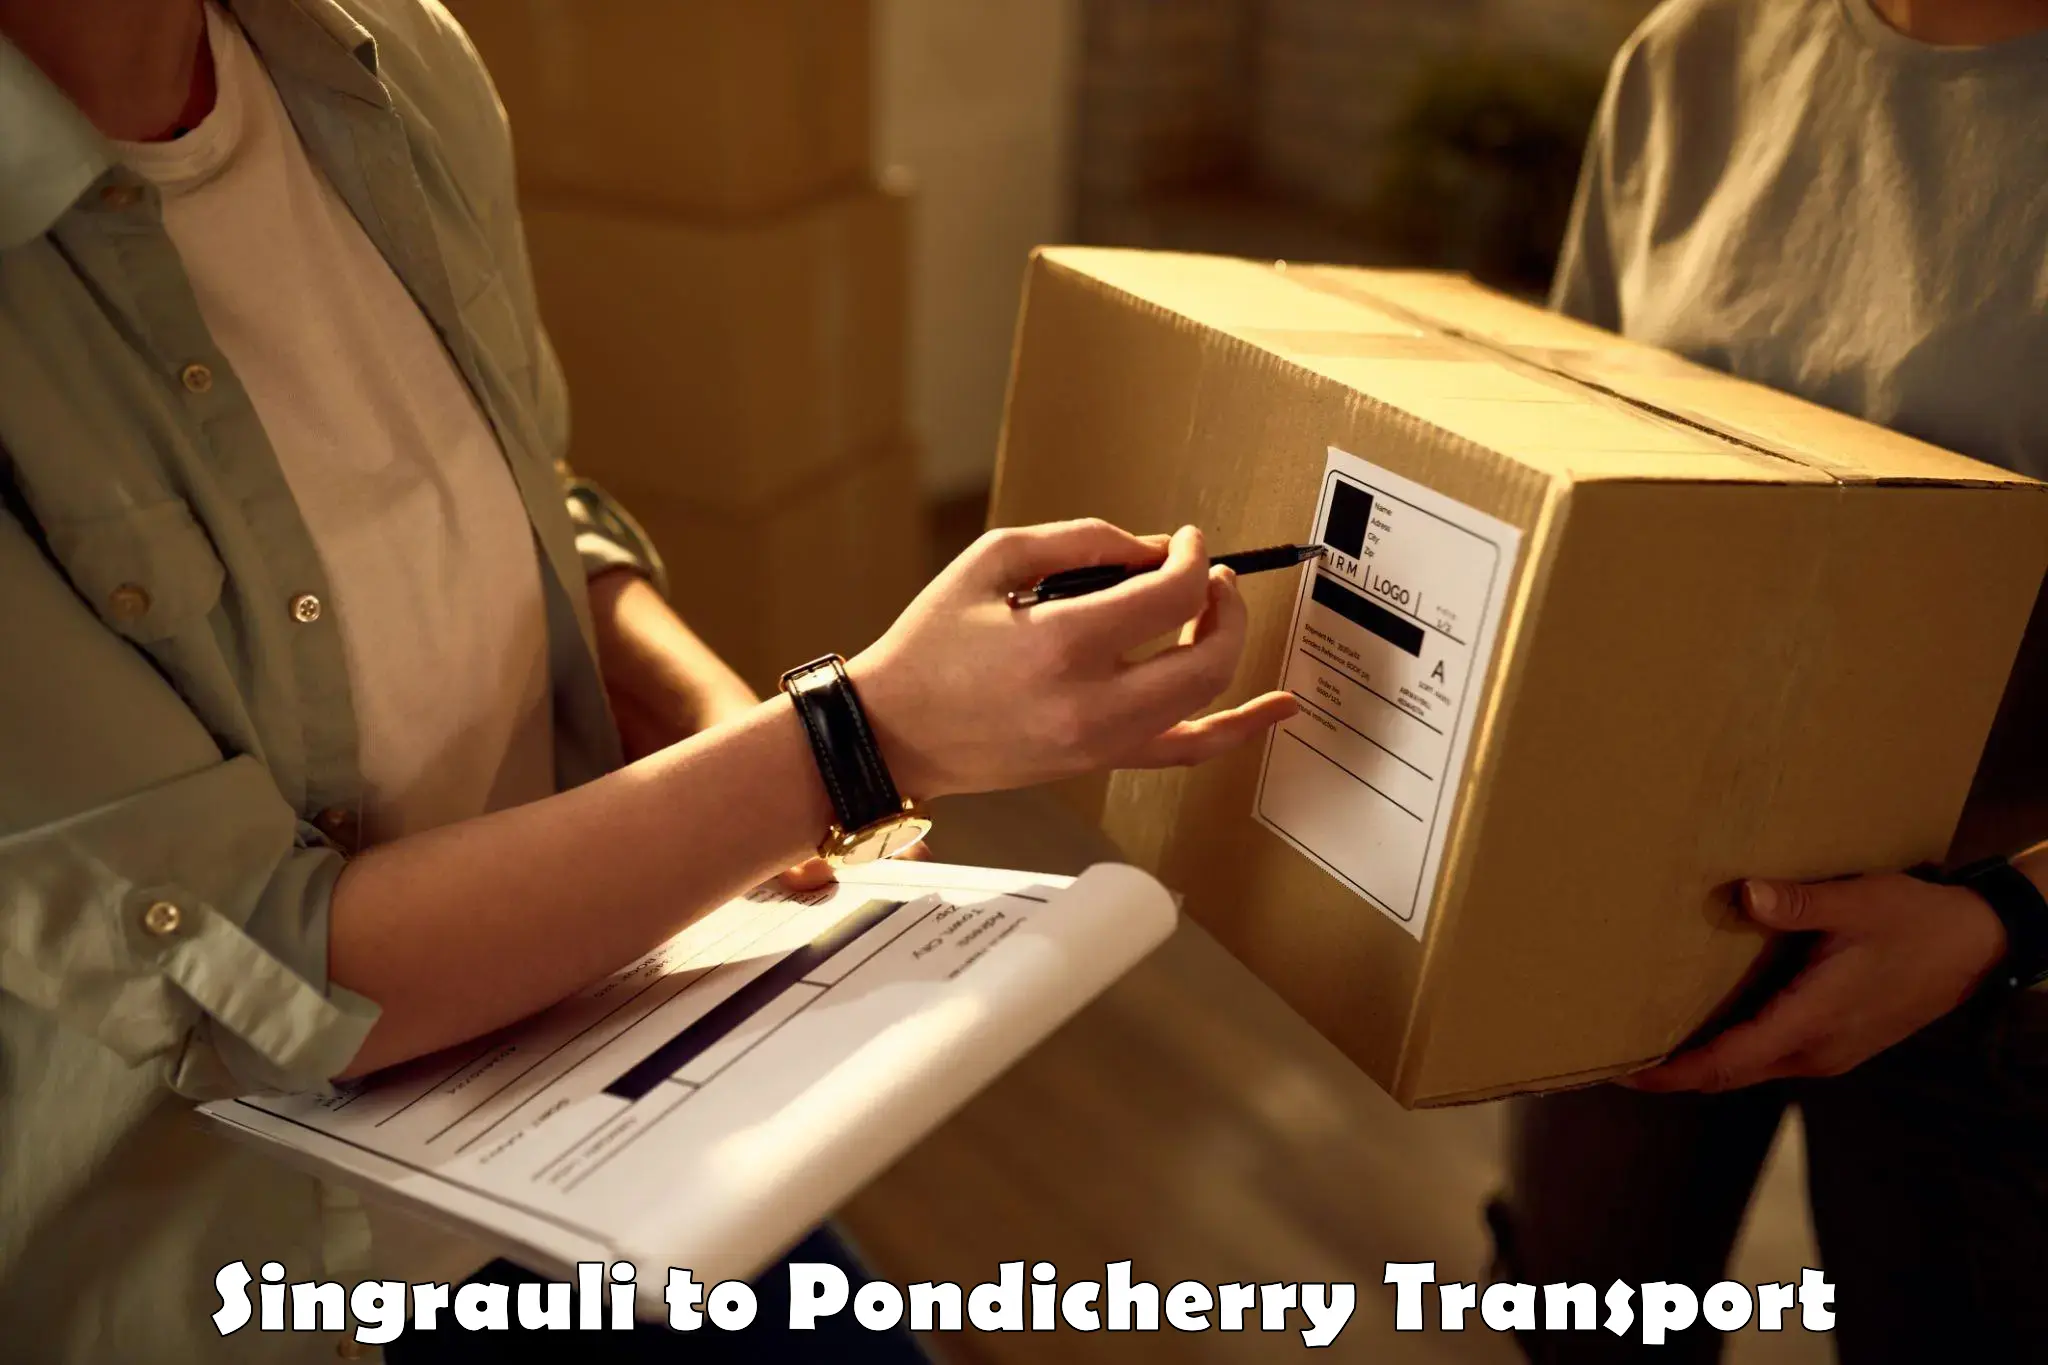 Daily transport service Singrauli to Pondicherry